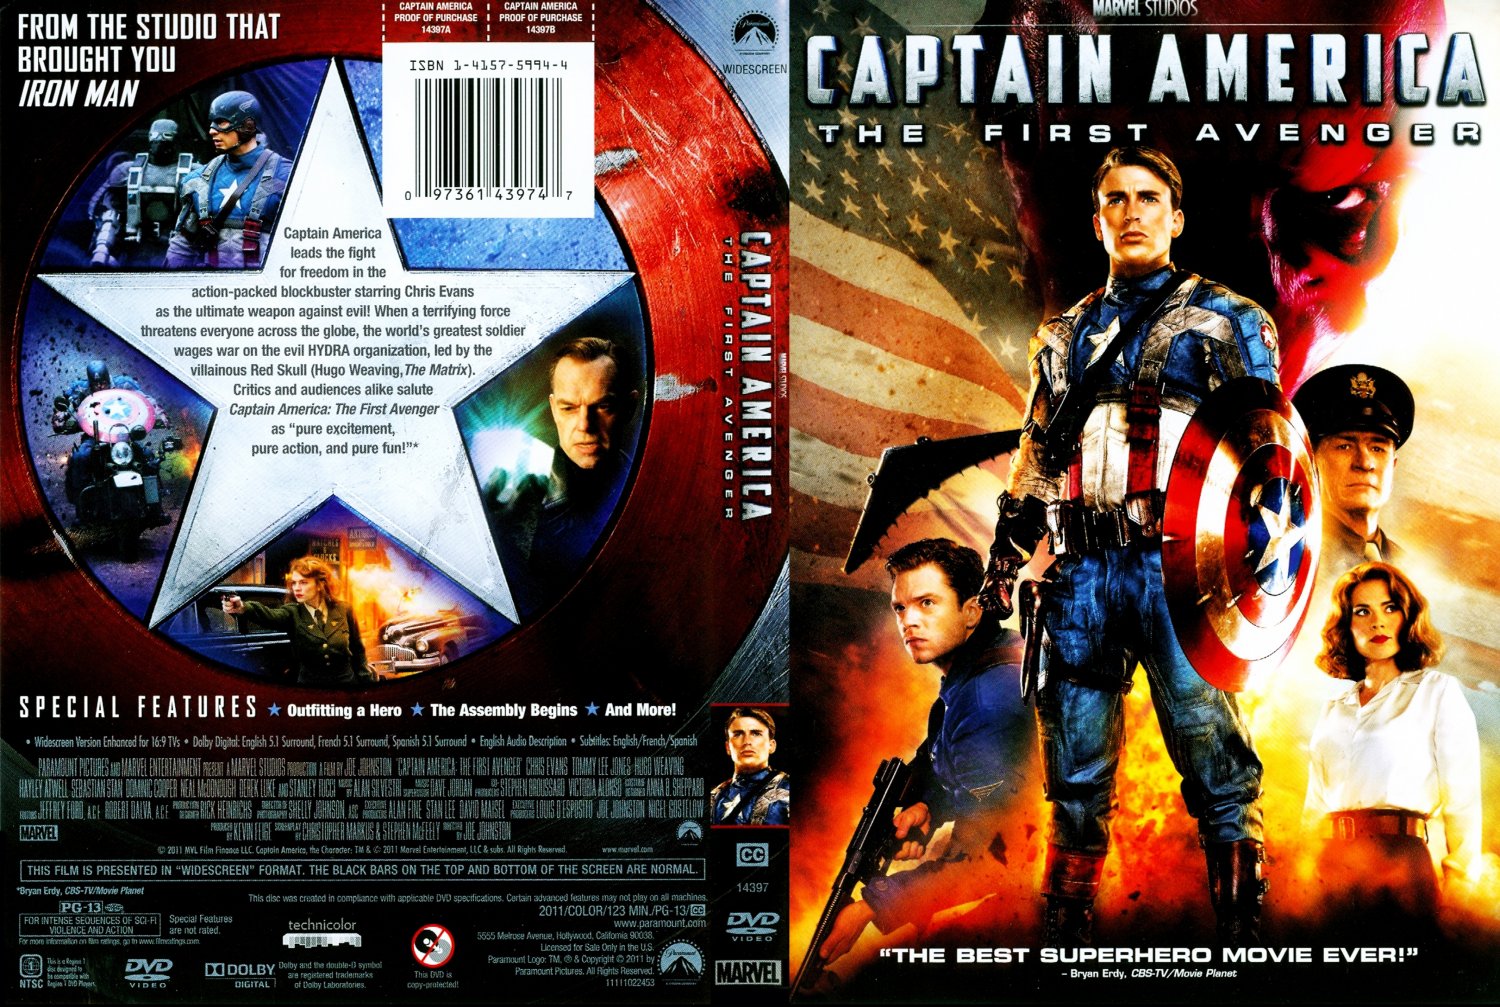 america the first avenger captain america the first avenger date 10 31